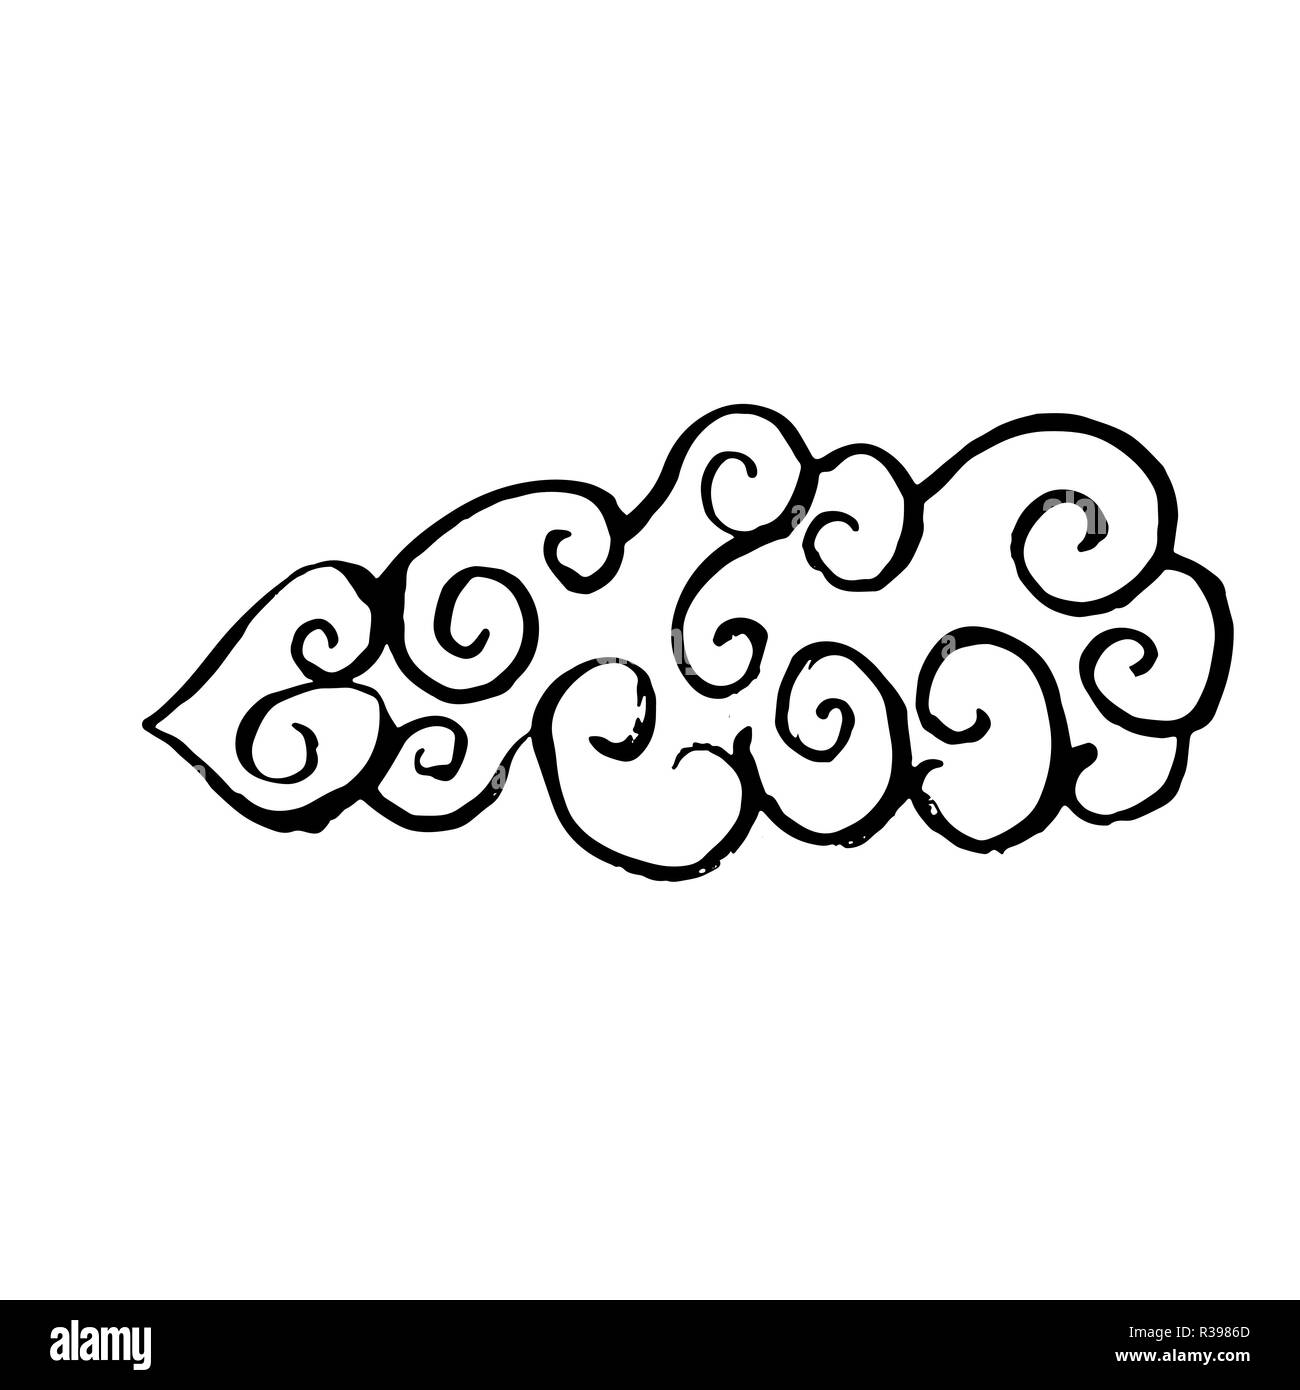 Brush cloud. Ink vector grunge illustration. Stock Vector